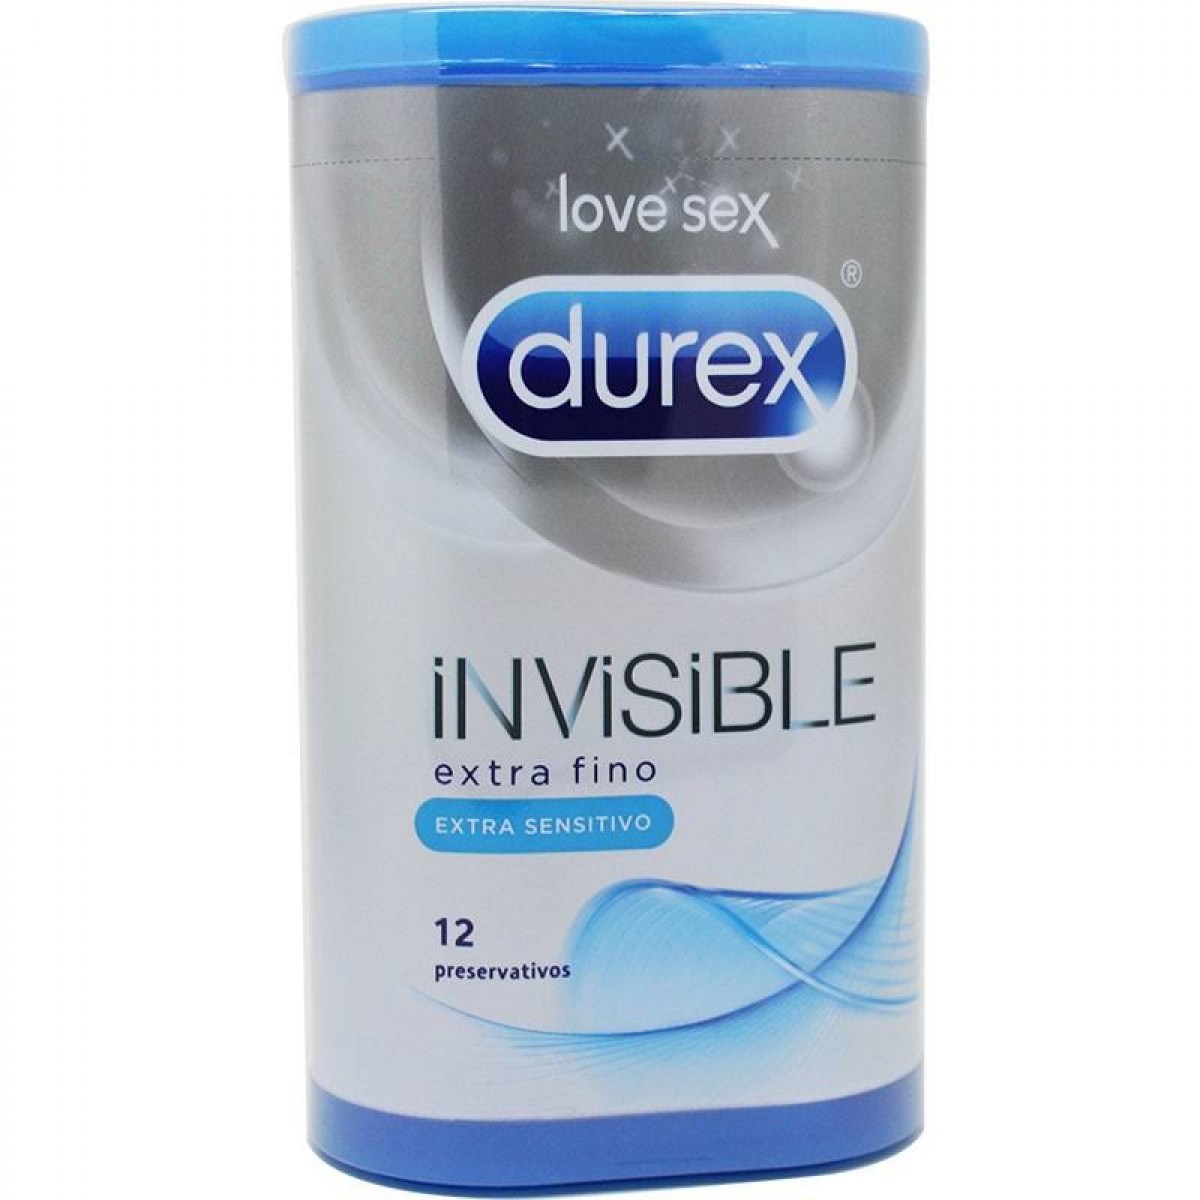 durex invisible extra sensitivo 12 preservativos